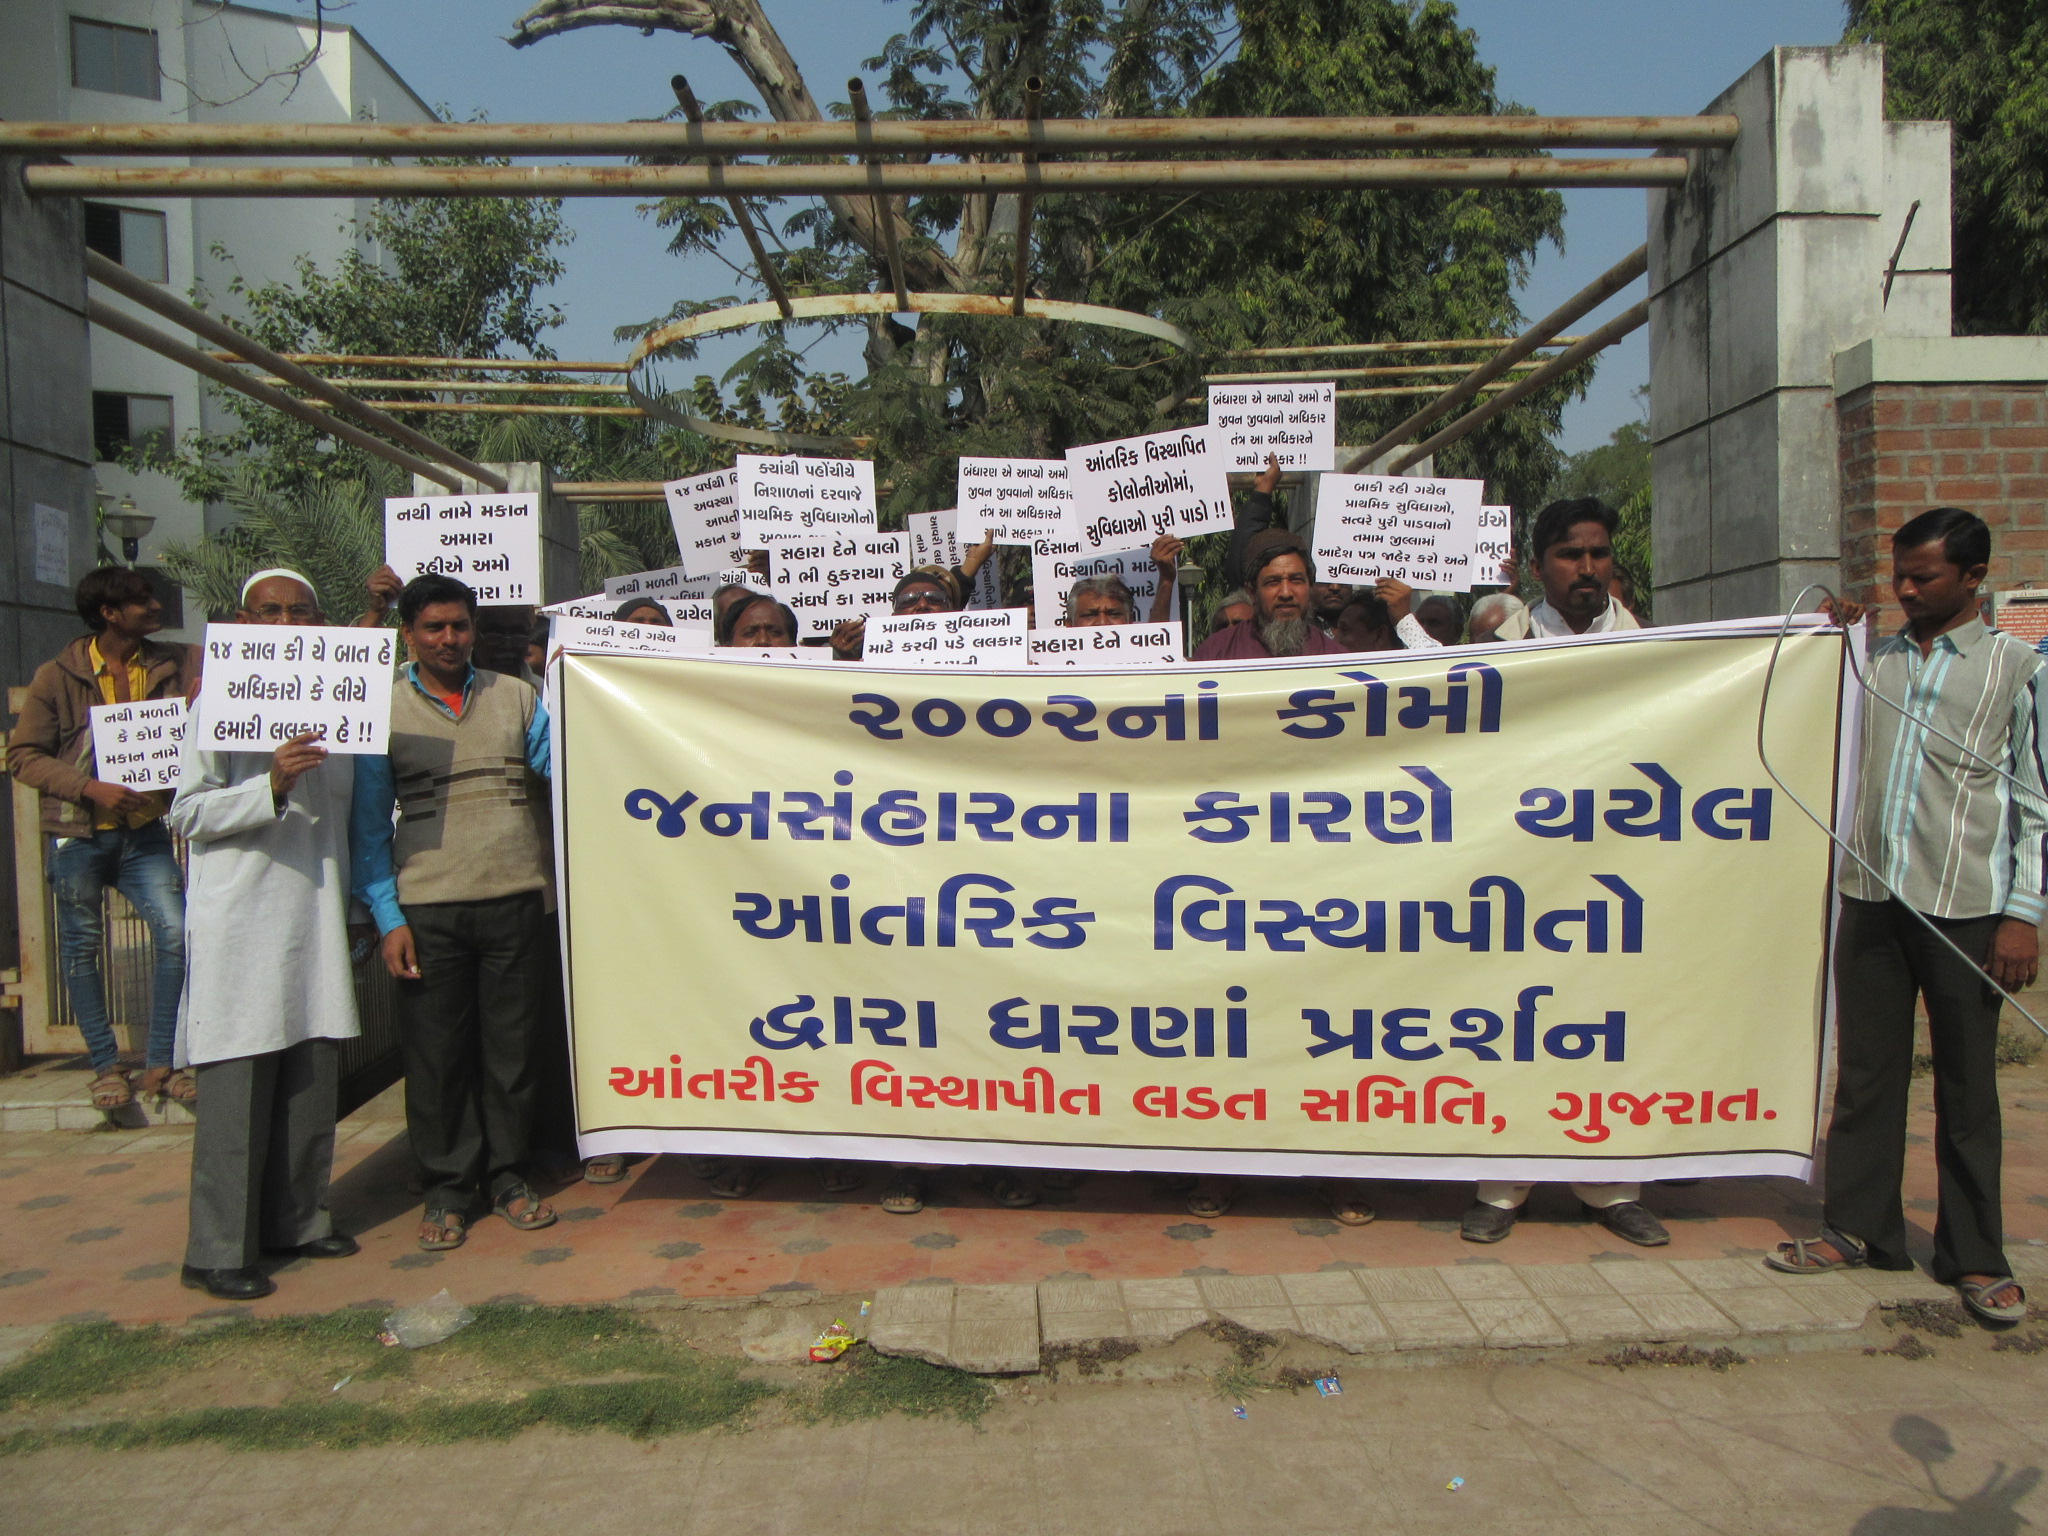 Survivors of 2002 Gujarat riots still live a wretched life sans govt aid - TwoCircles.net